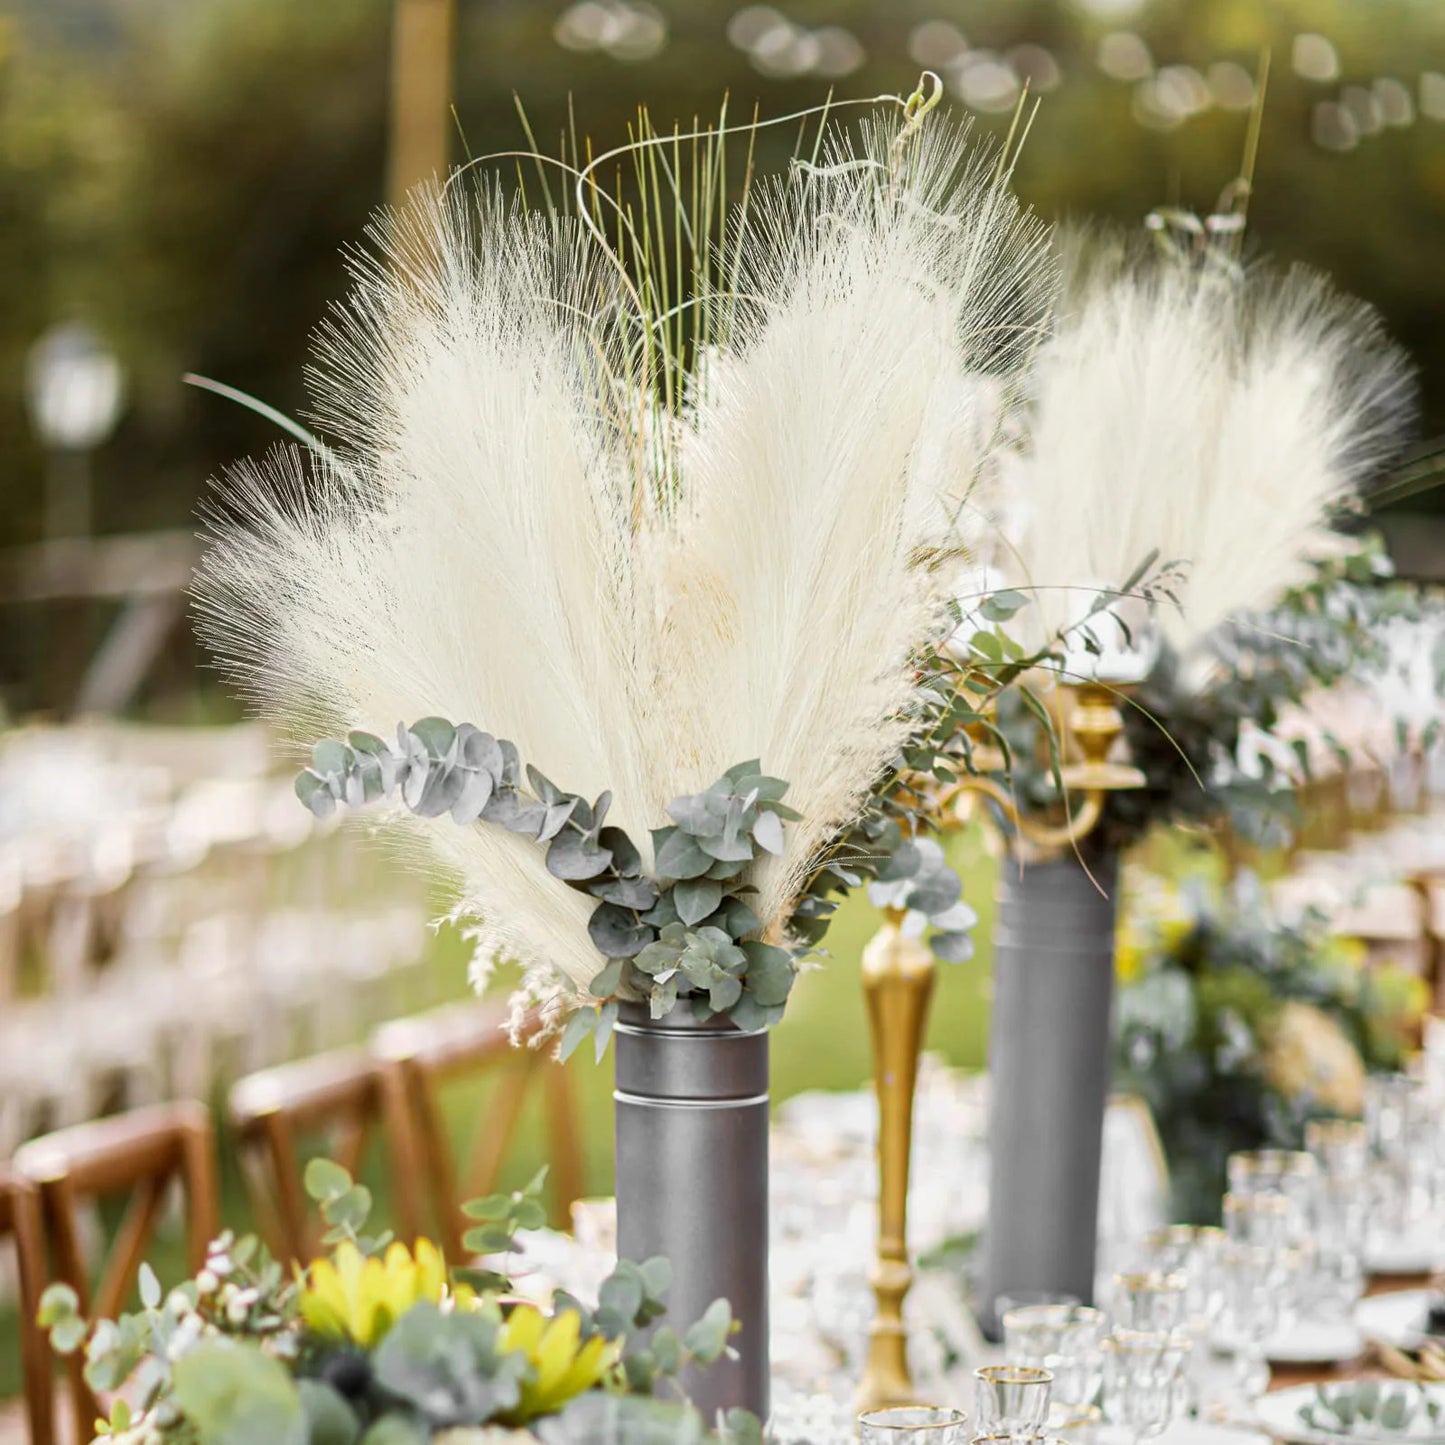 Stunning Fluffy Artificial Pampas Grass Bouquets - Endless Possibilities! - LuxycDécor